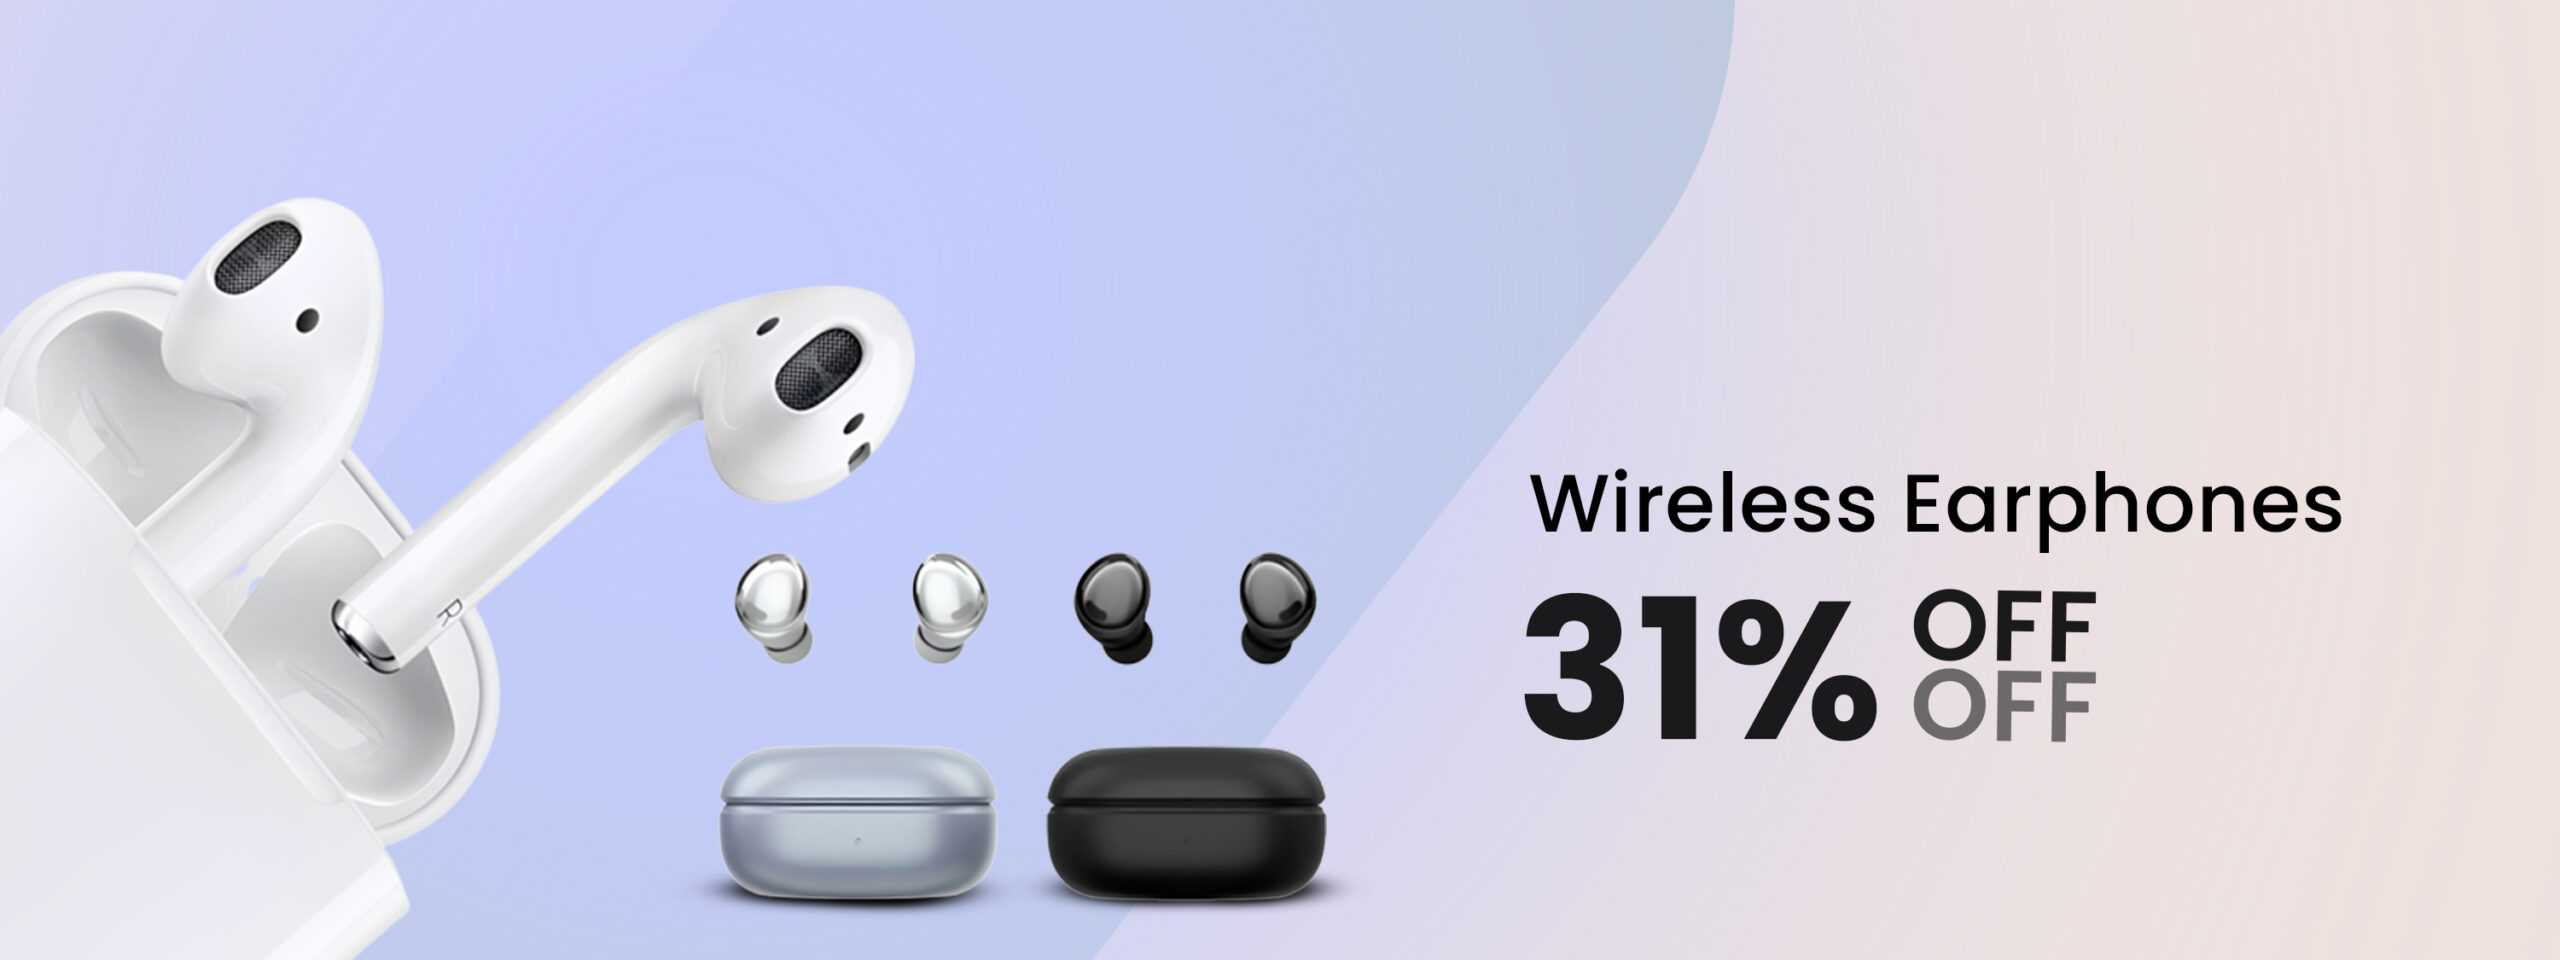 wireless earphones at 31% off in bahrain